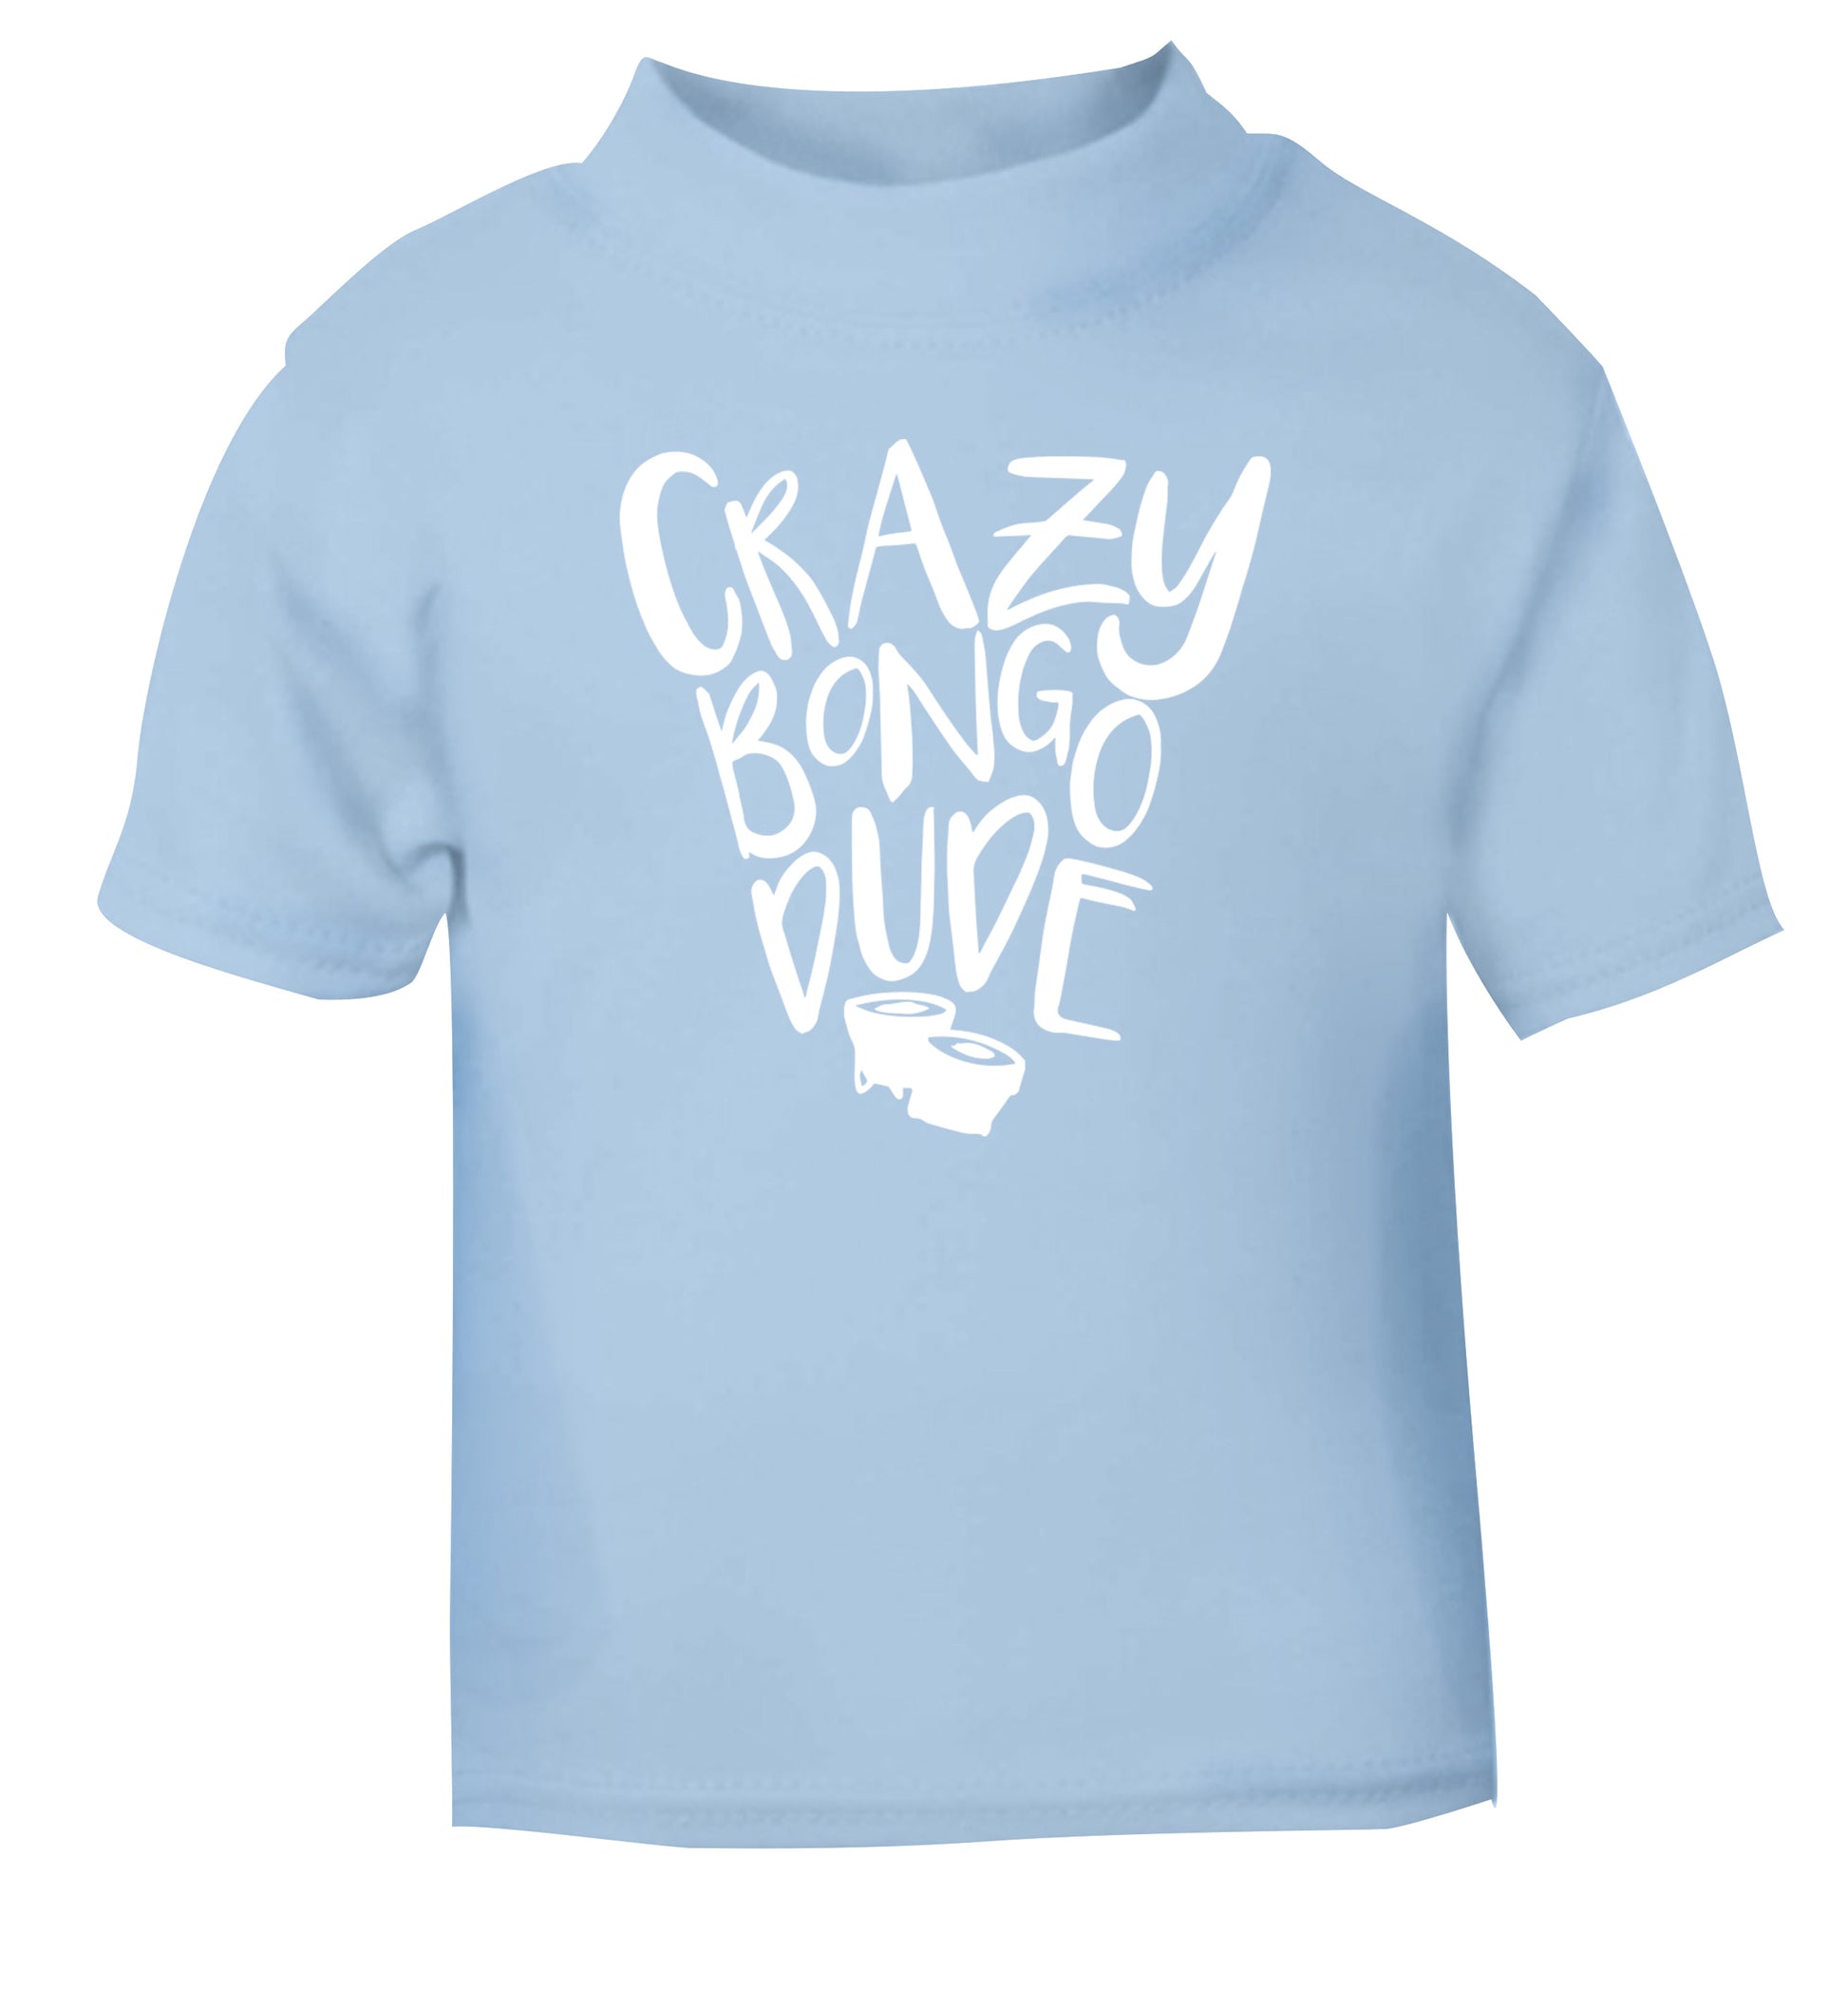 Crazy bongo dude light blue Baby Toddler Tshirt 2 Years